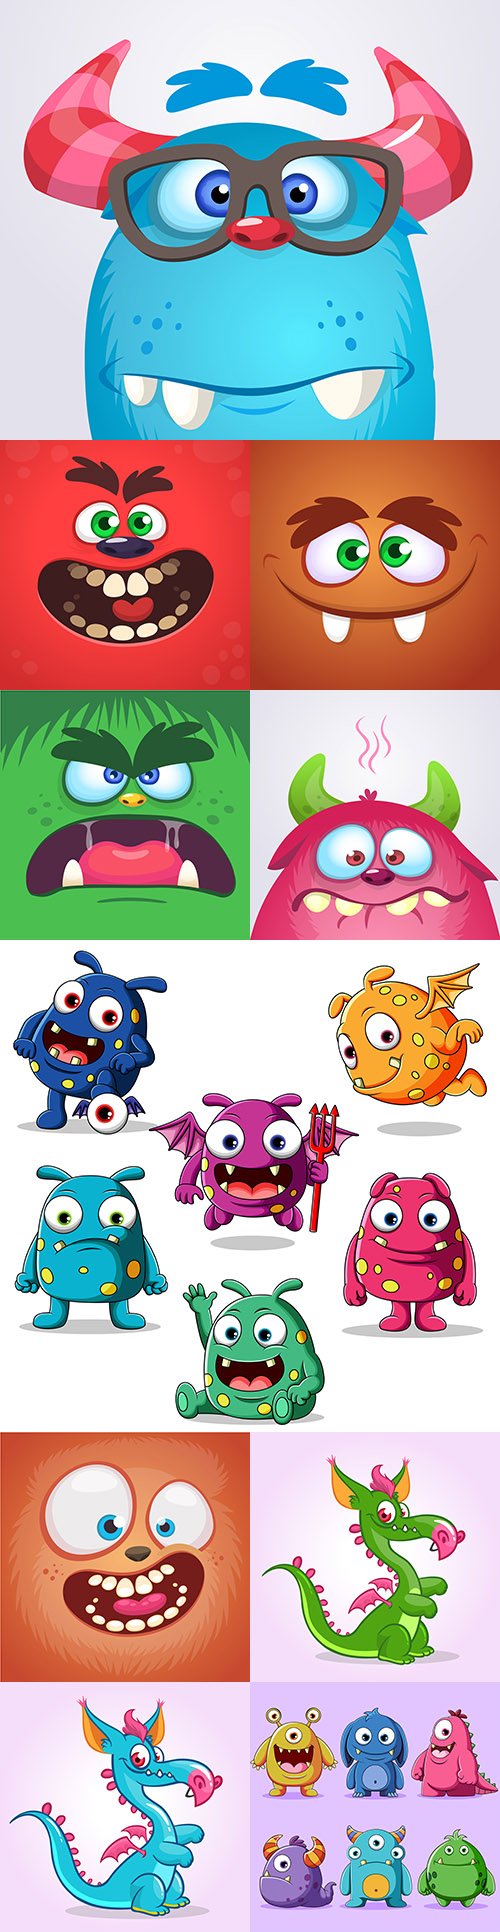 Funny cartoon monsters illustration